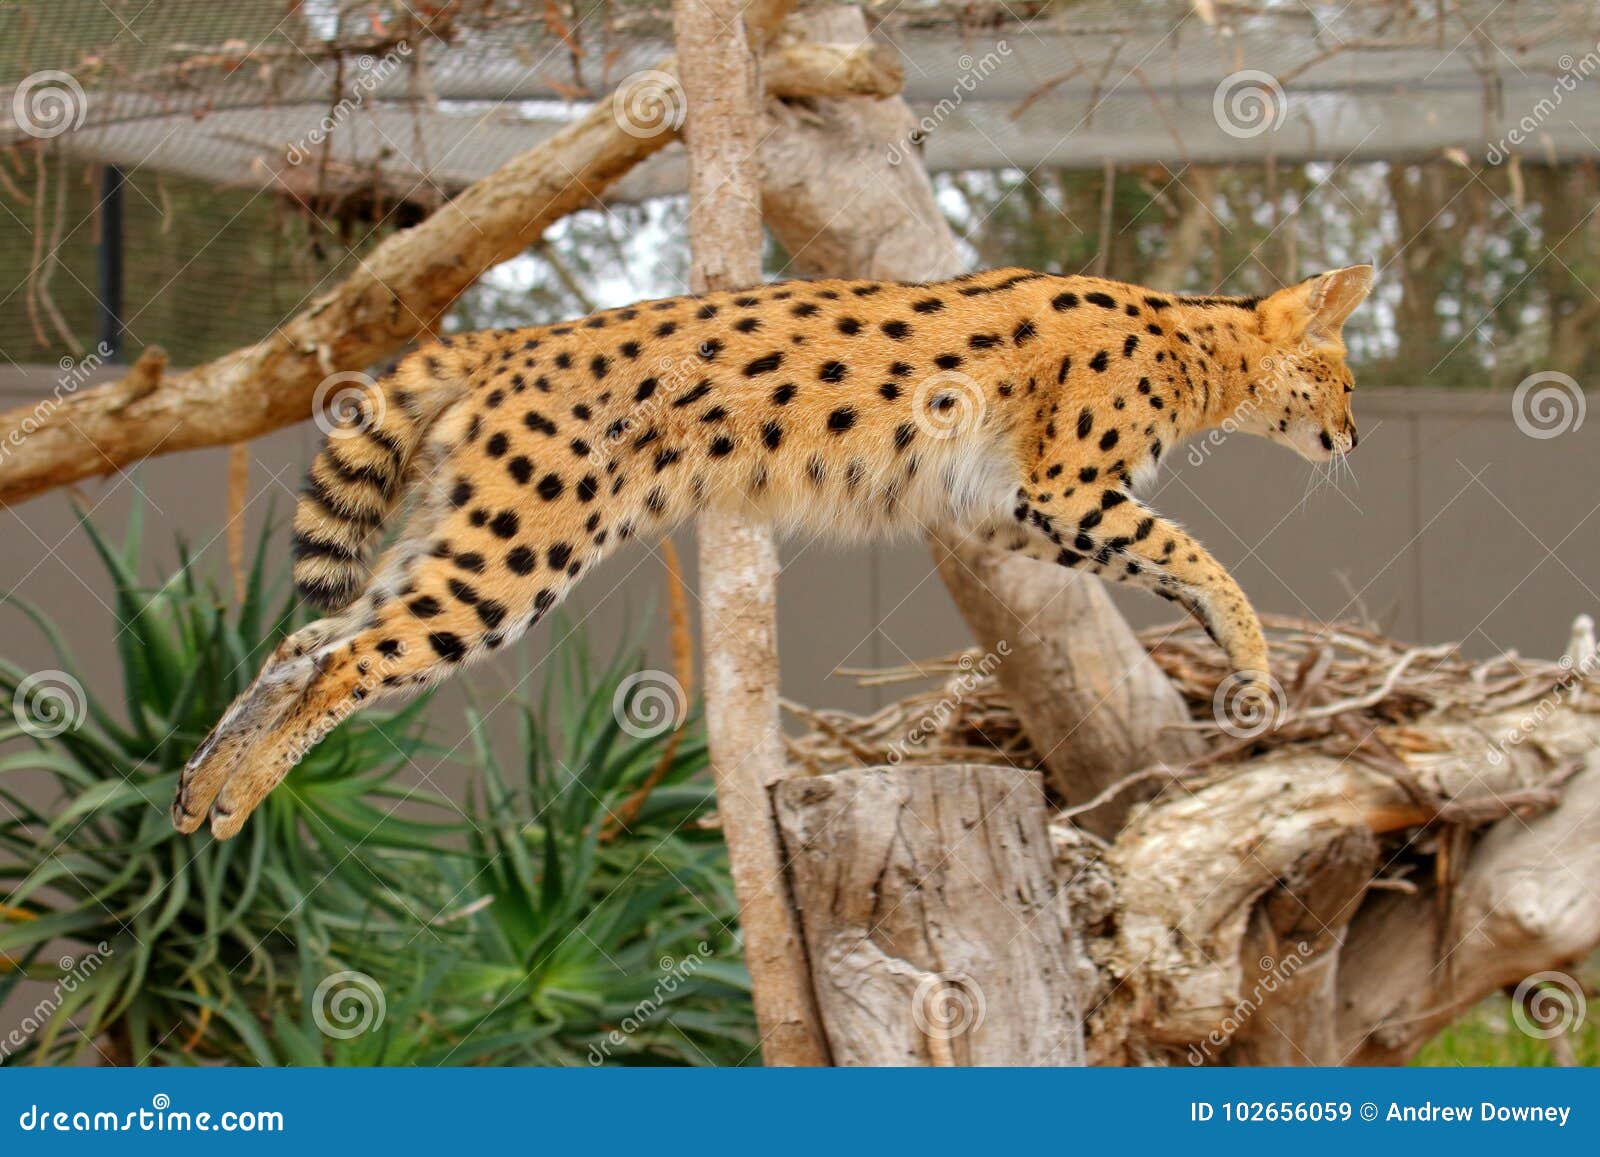 serval jumping - lepitailurus